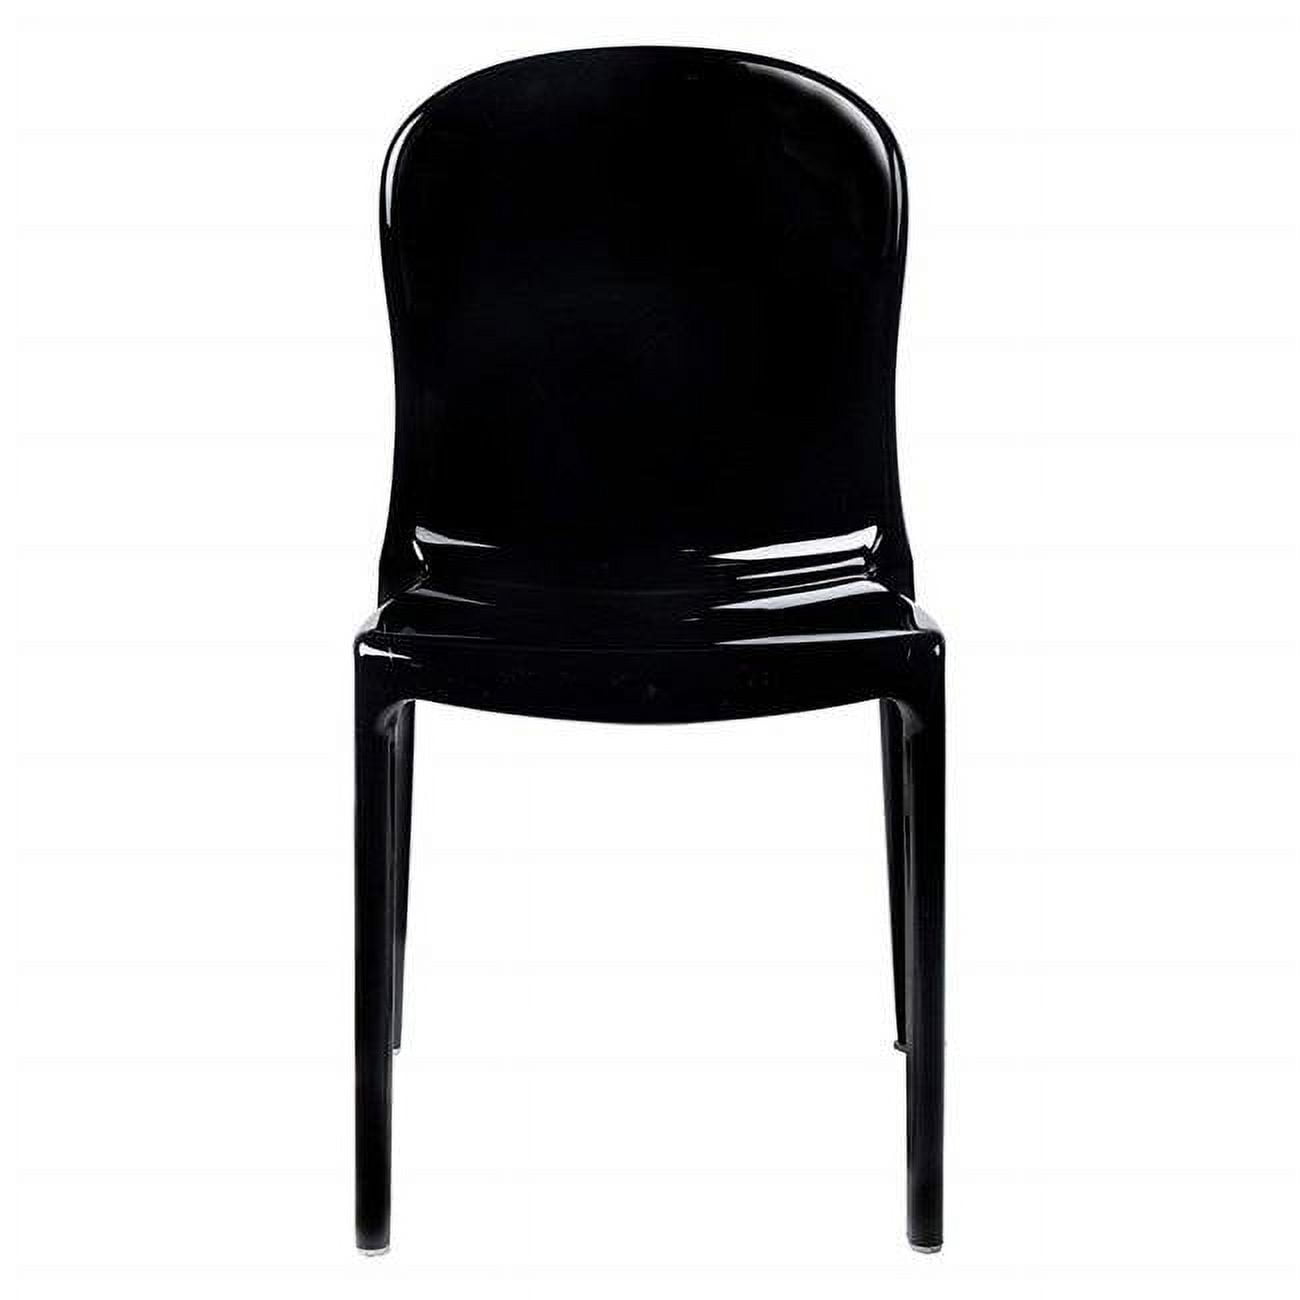 Rpc-genoa-bk-web4 Genoa Polycarbonate Stackable Black Chair, Set Of 4 - 33 X 16.5 X 21 In.